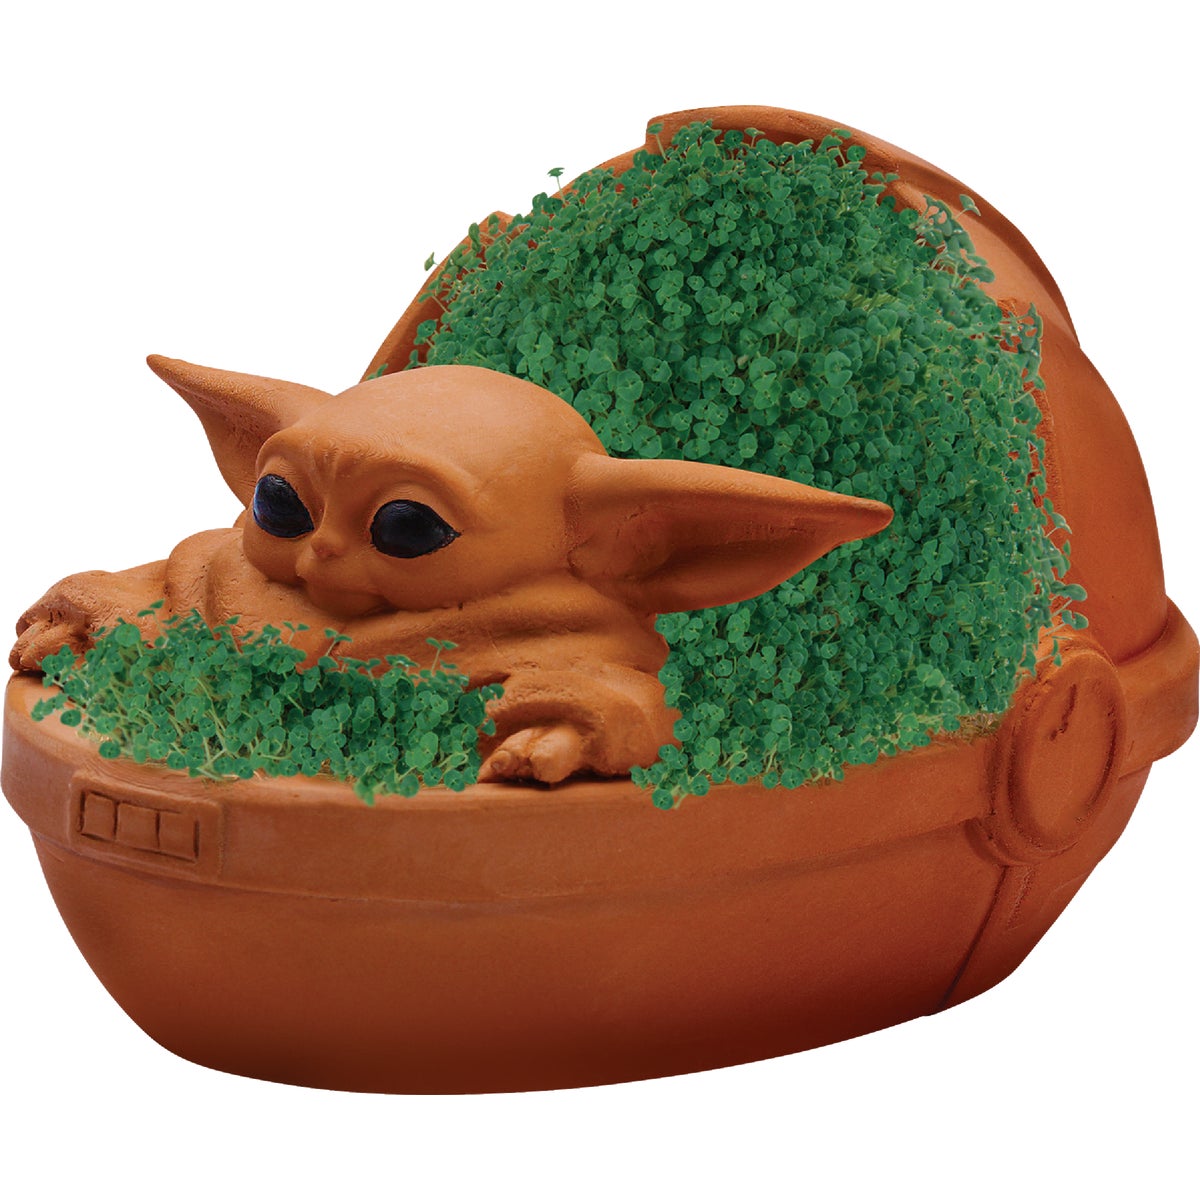 Chia Pet Star Wars The Child Decorative Pottery Planter